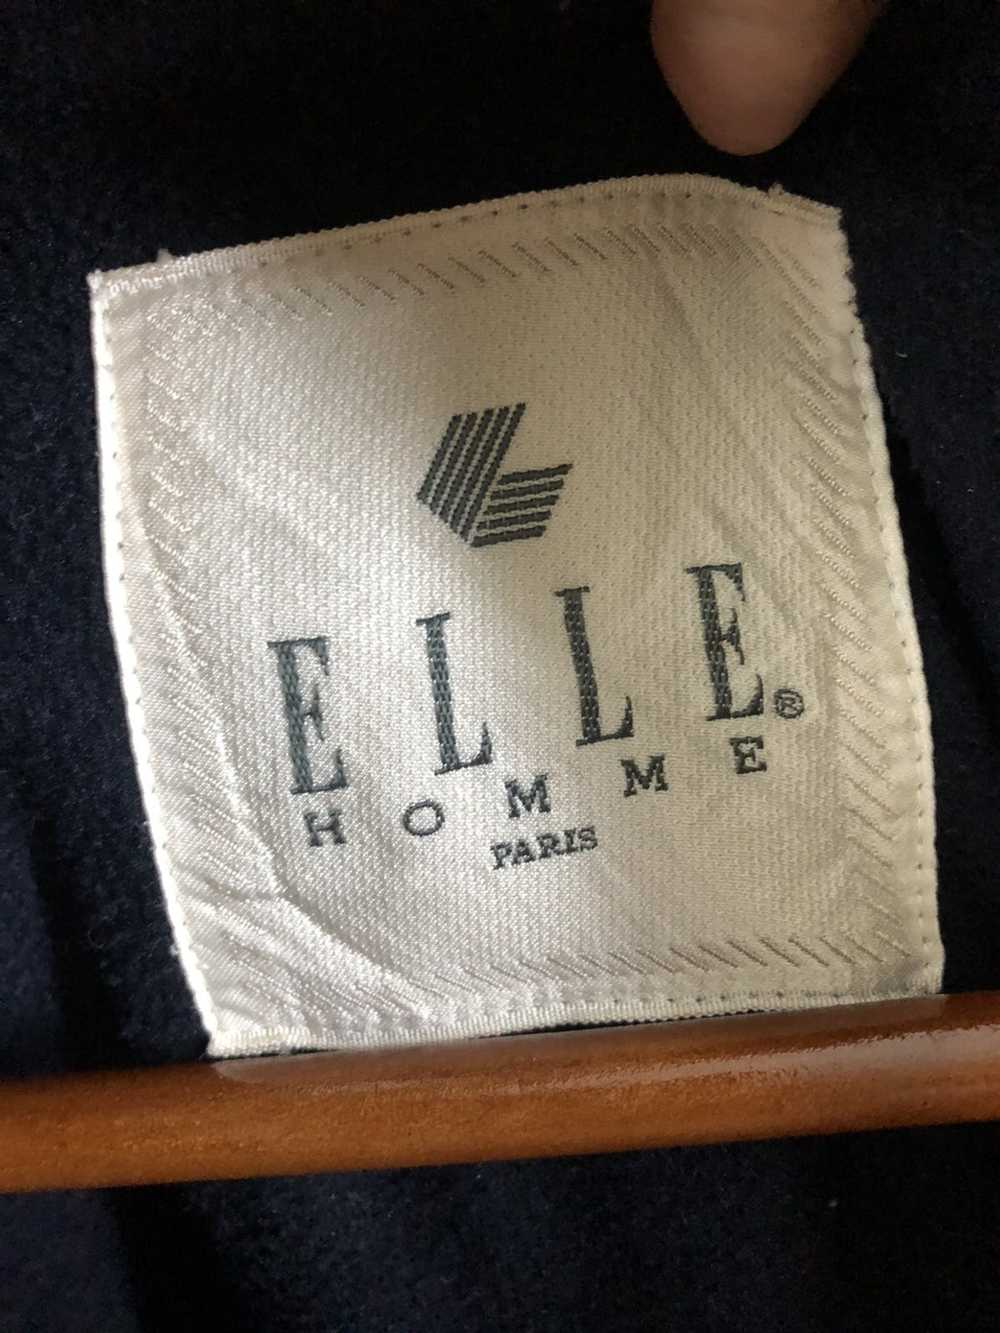 Japanese Brand Elle Homme Paris Anorak Jacket - image 3